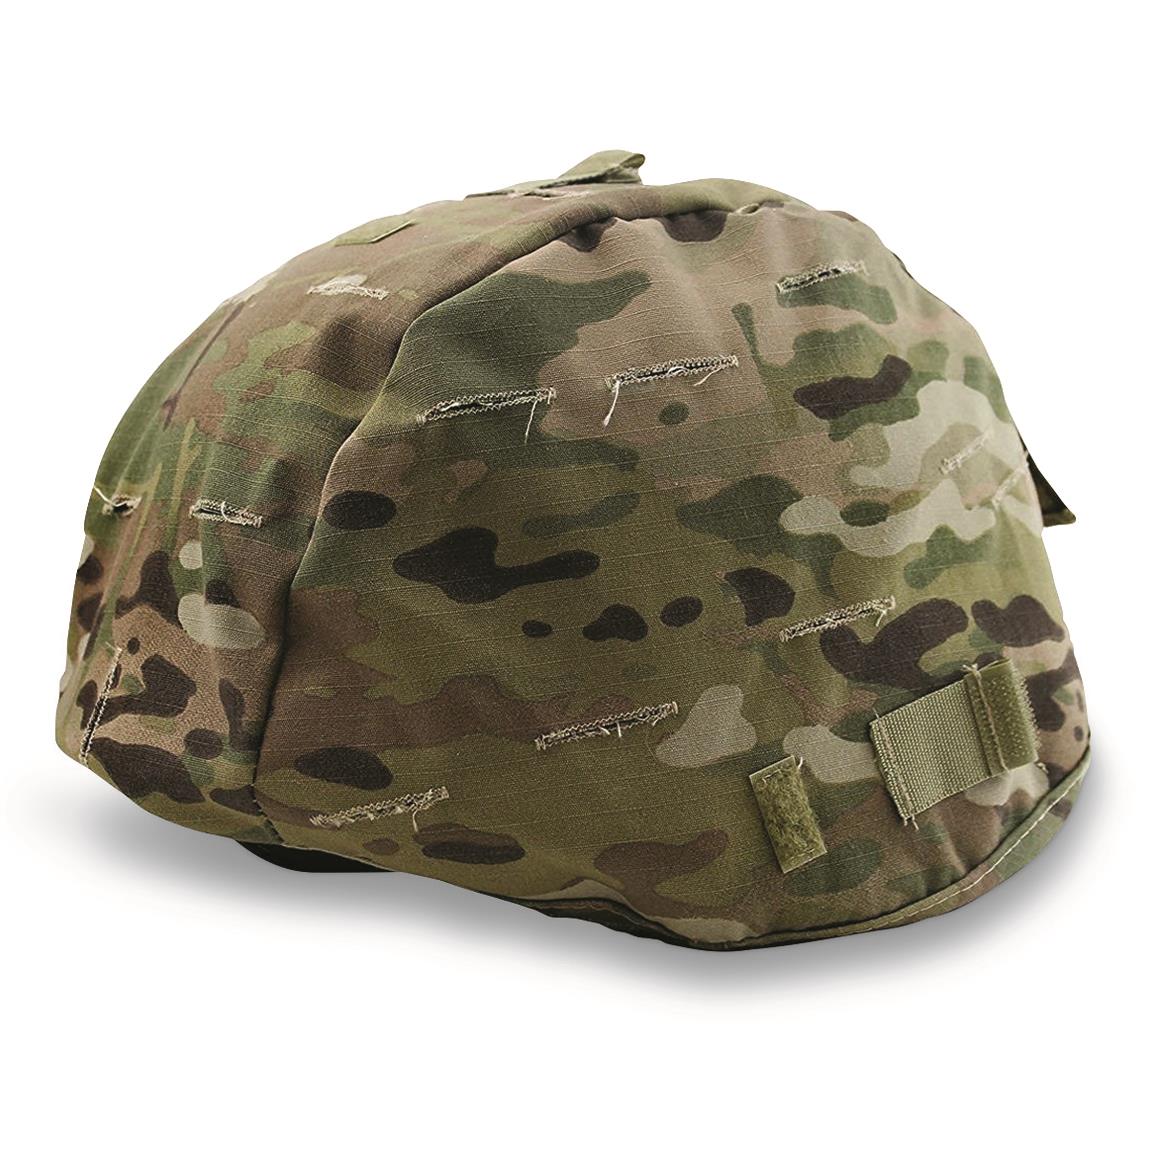 U.S. Military Surplus MICH/ACH Advanced Combat Multicam Helmet Cover, New, Multicam OCP